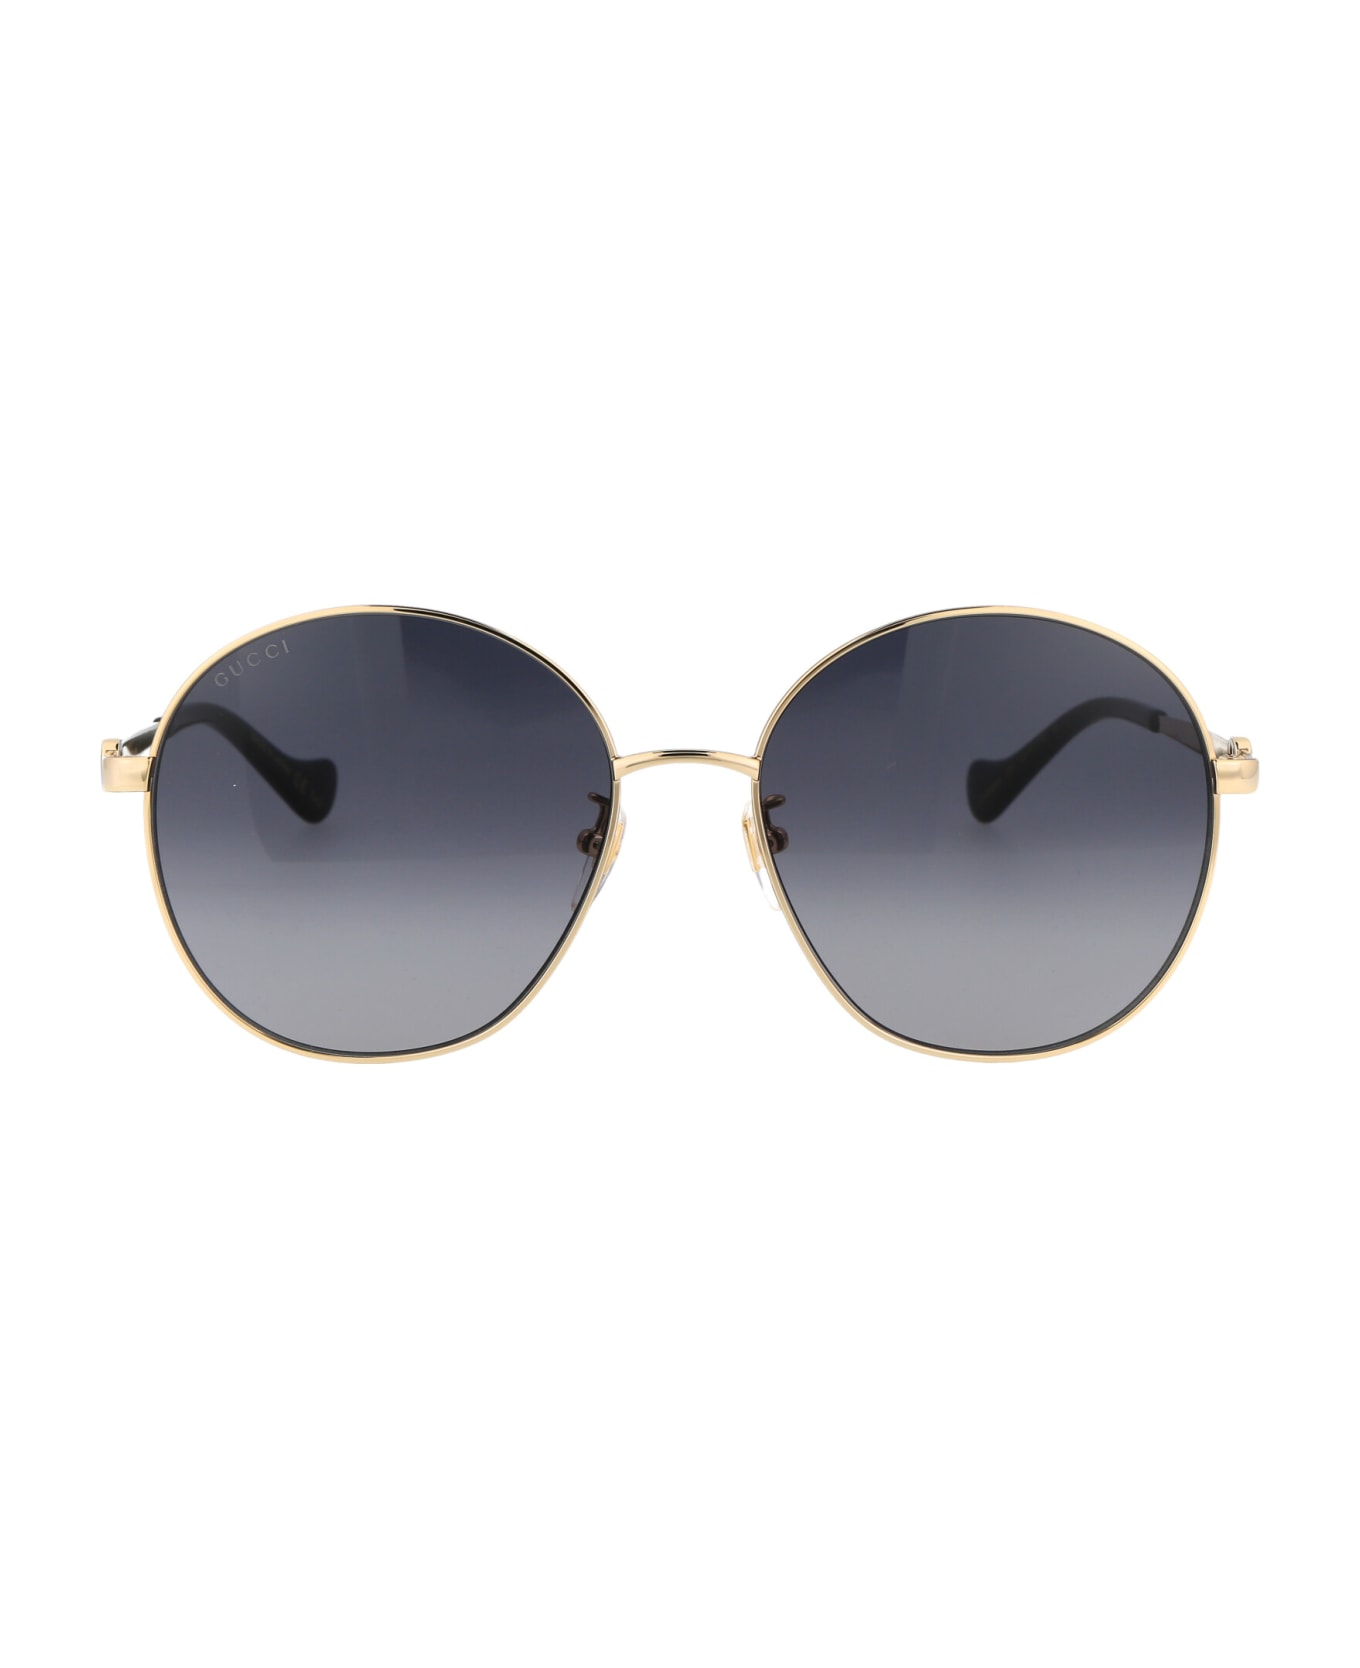 Gucci Eyewear Gg1090sa Sunglasses - 001 GOLD GOLD GREY サングラス